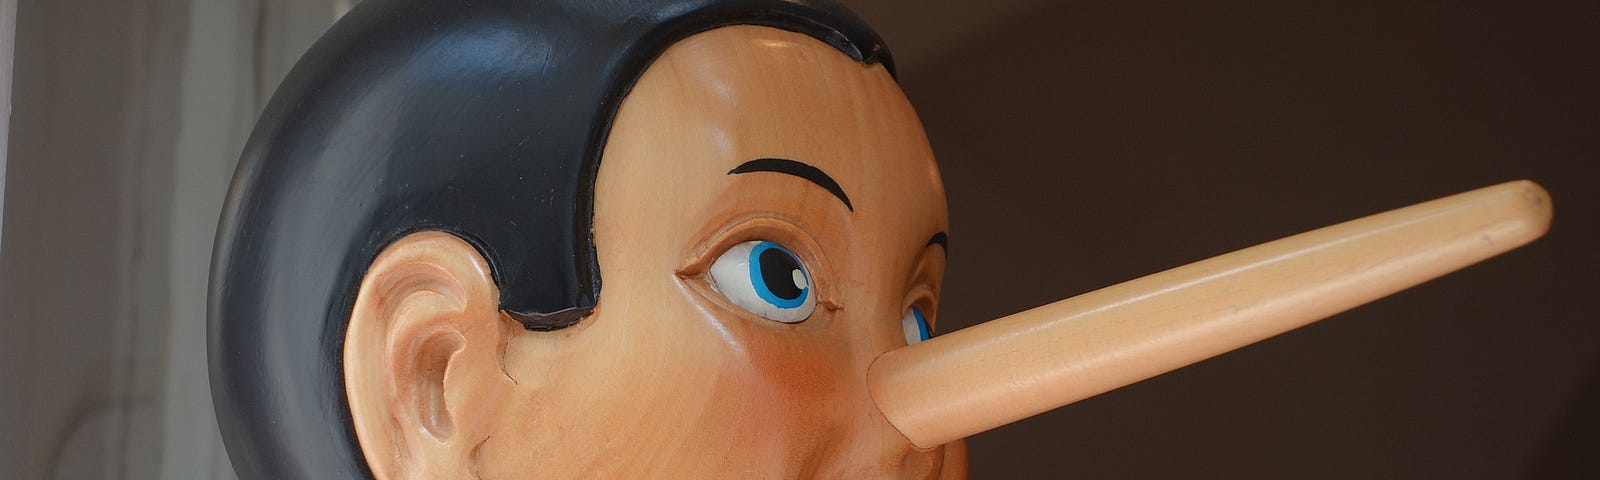 Pinocchio’s long nose.